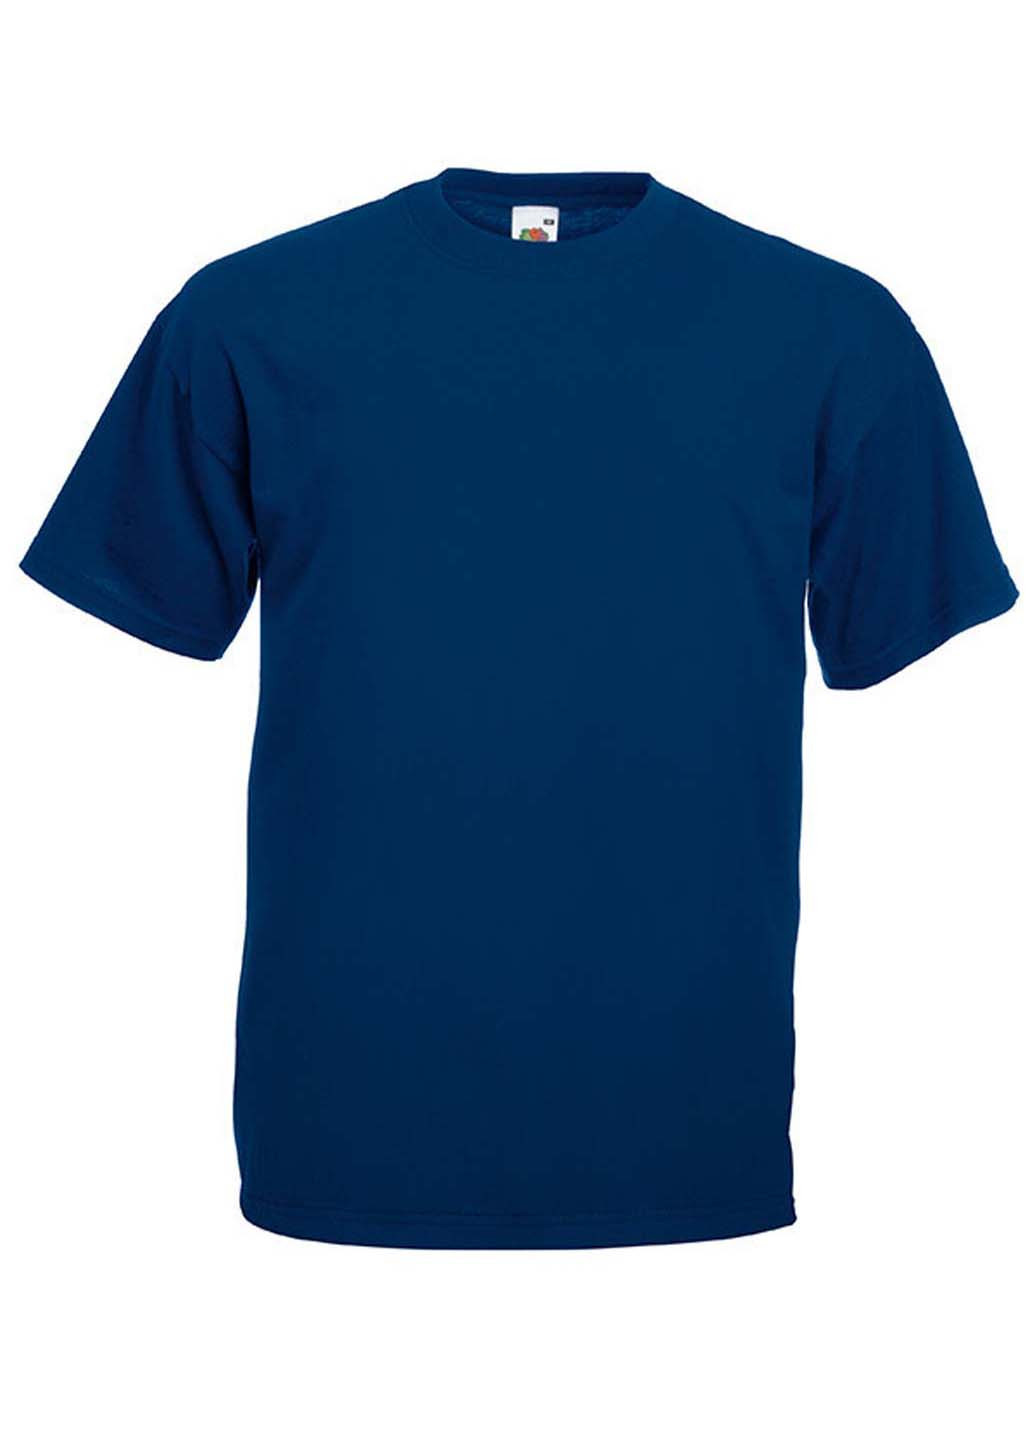 Синяя футболка Fruit of the Loom ValueWeight